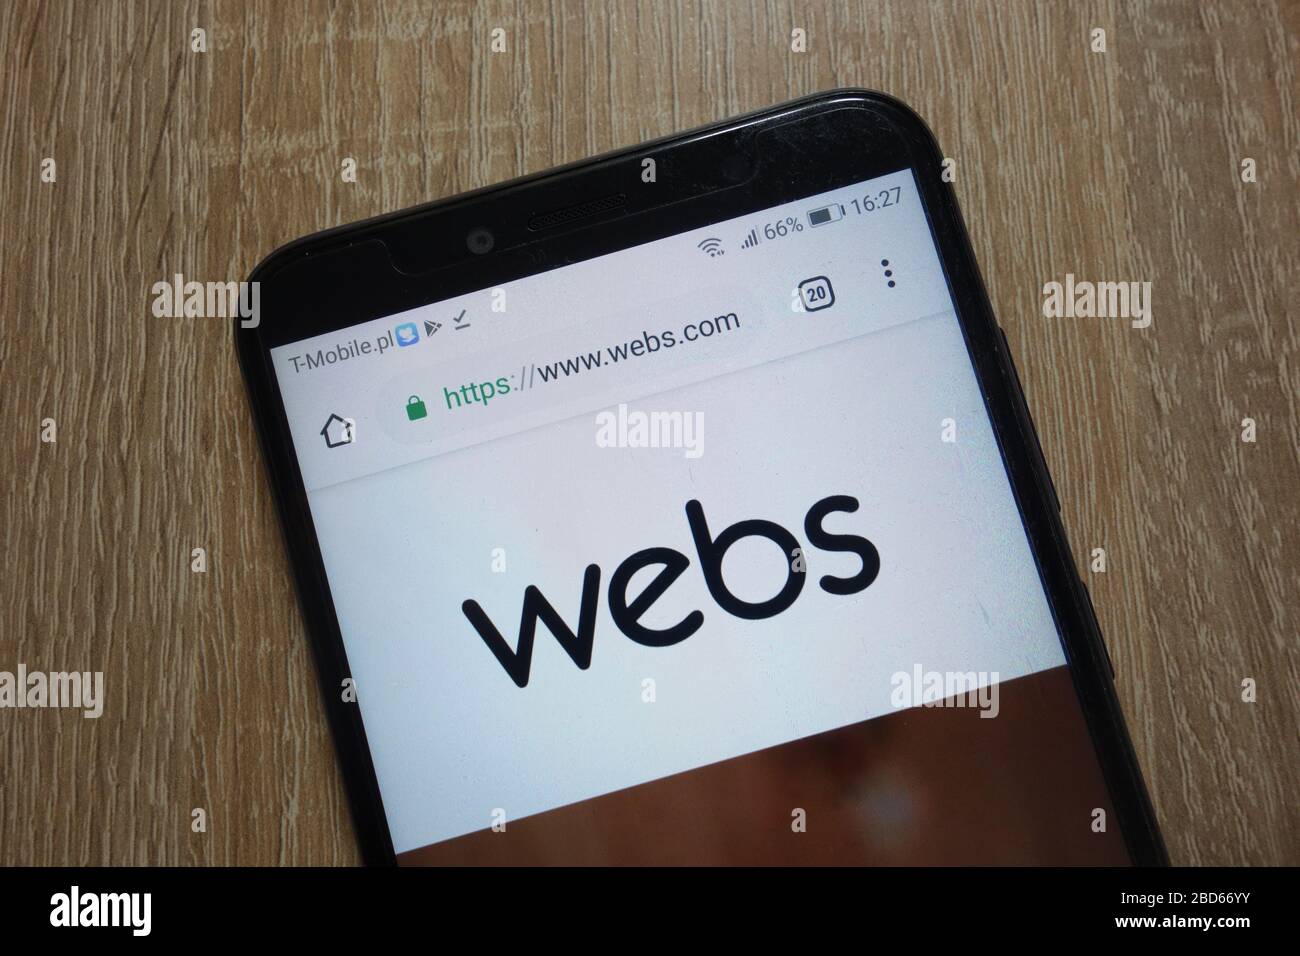 Webs website (www.webs.com) displayed on smartphone Stock Photo